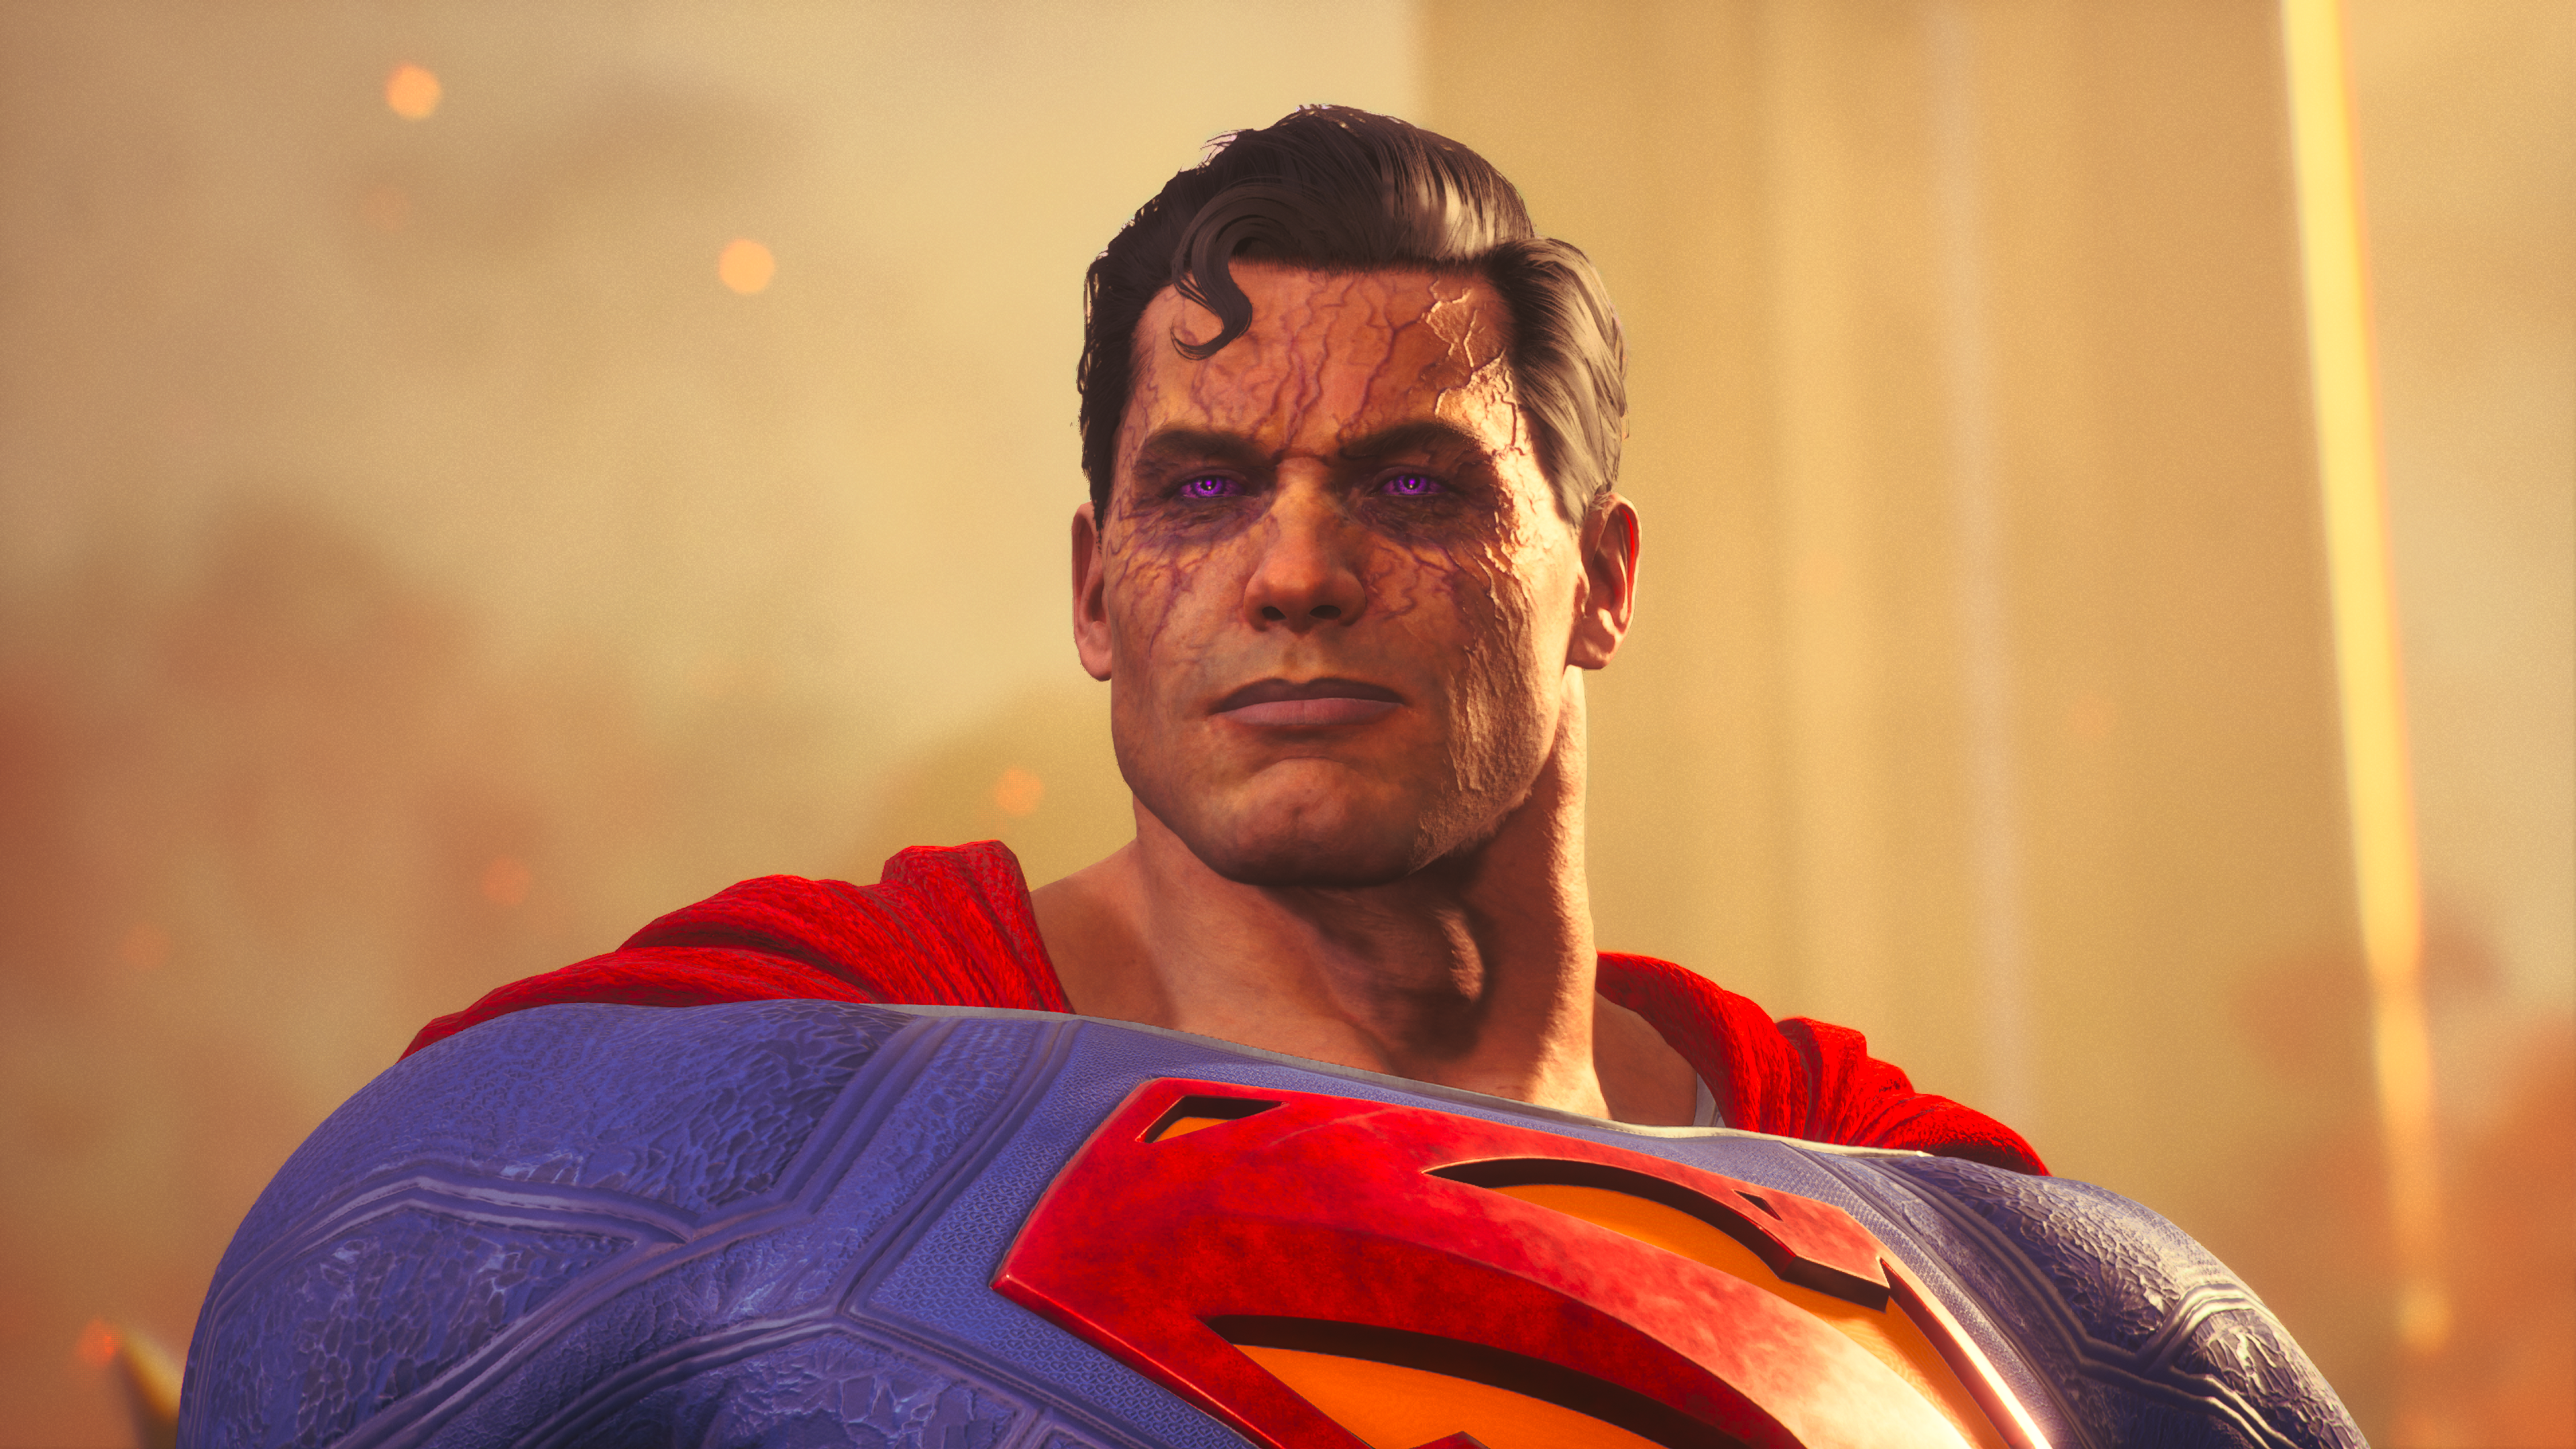 Screenshot: Superman corrotto